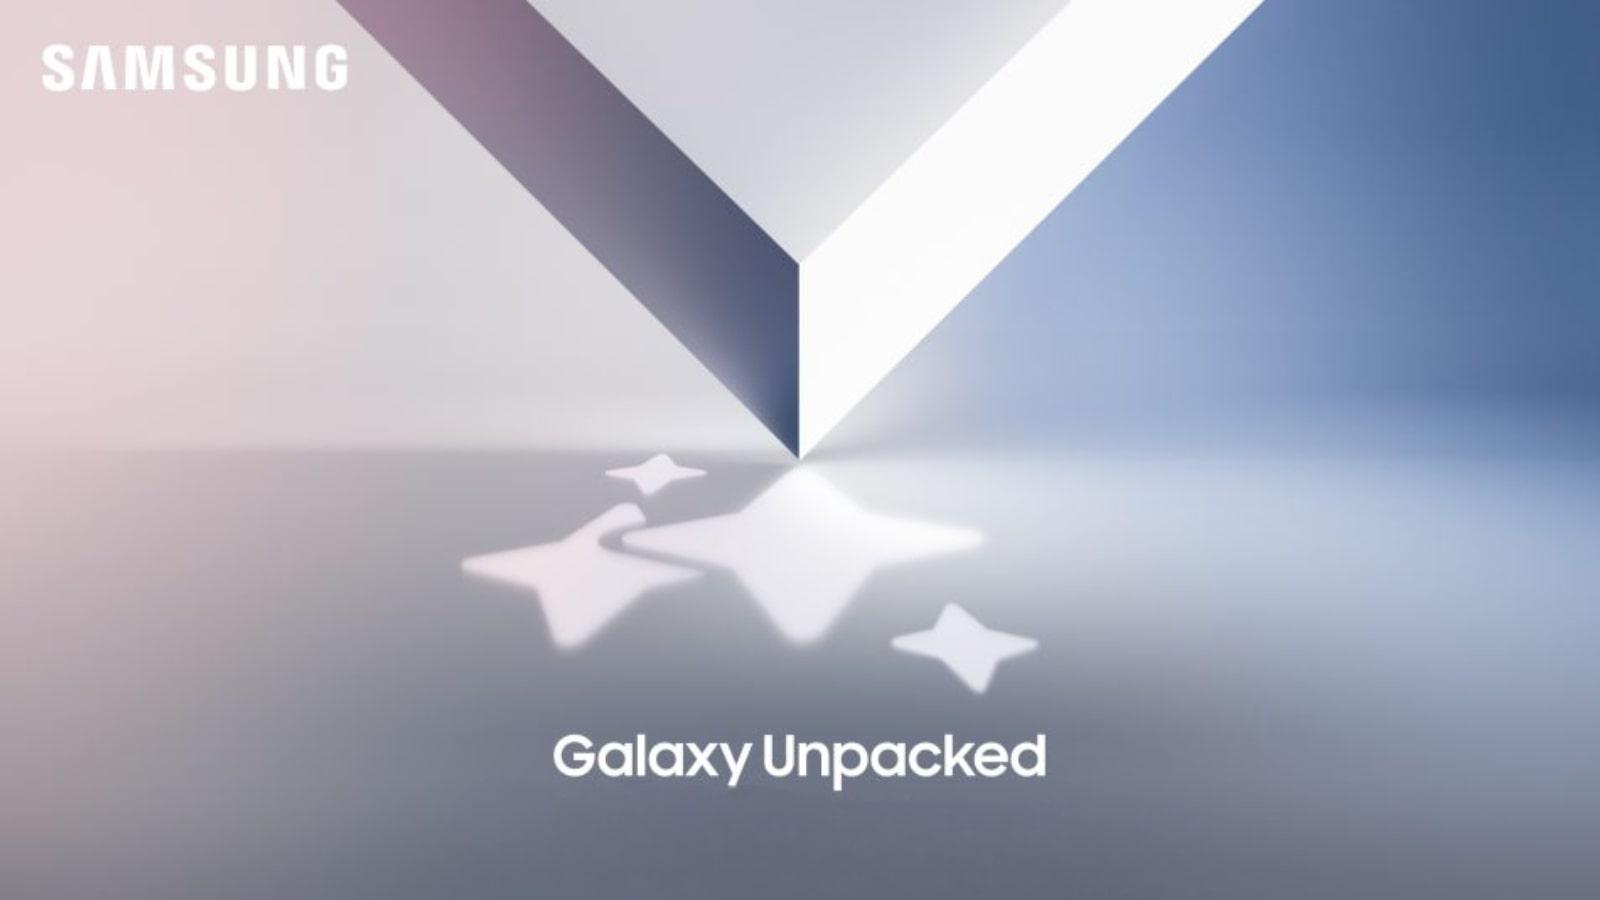 Samsung Galaxy Unpacked invitation animation